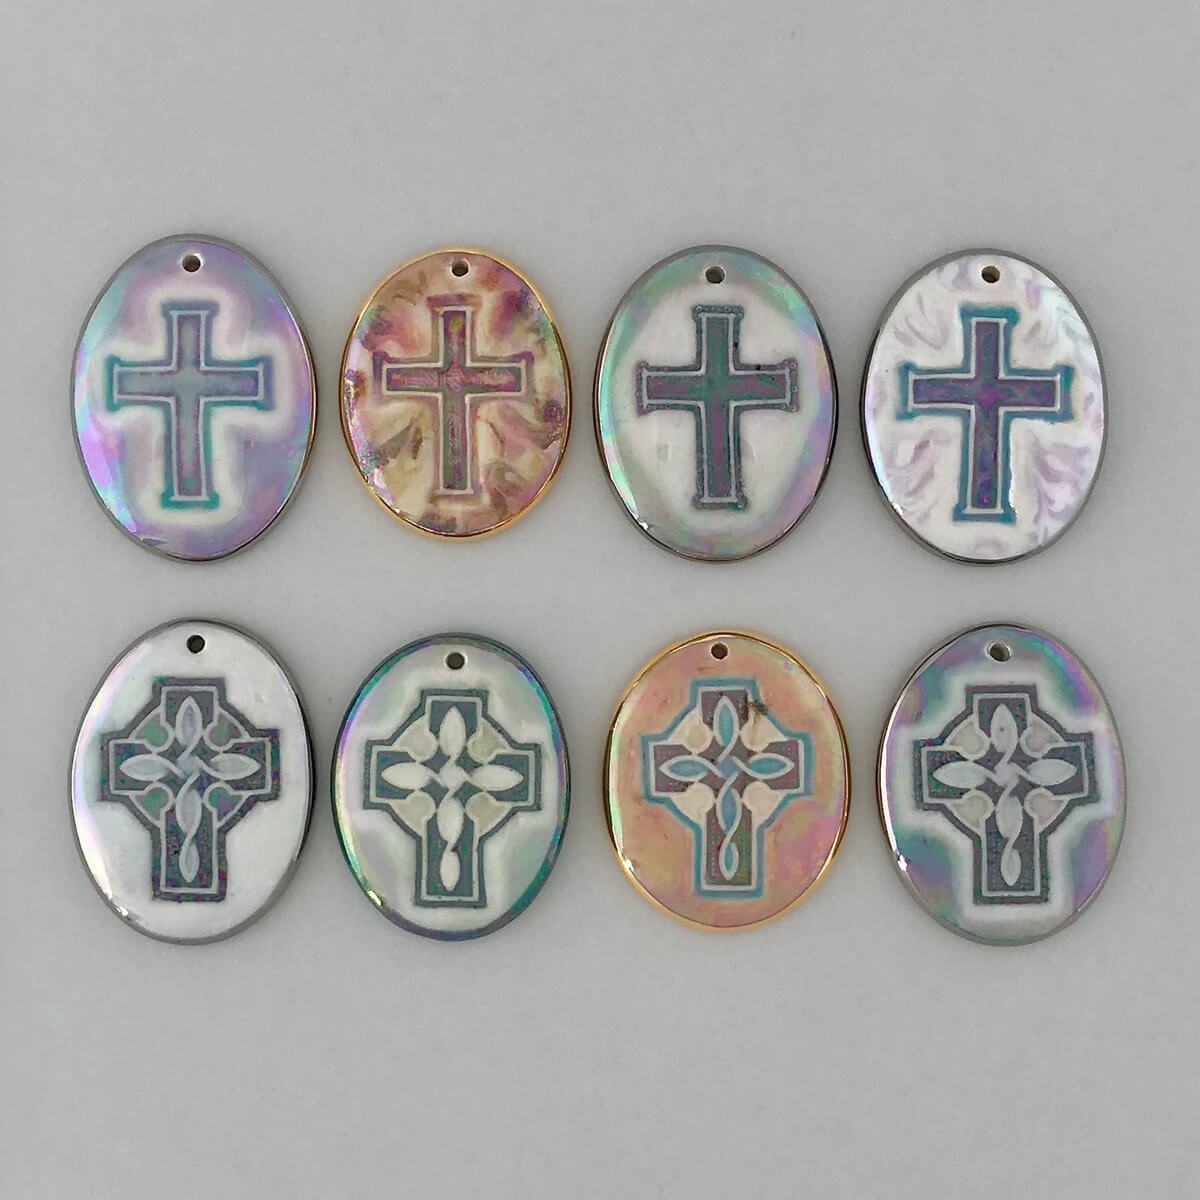 Traditional & Celtic cross pendants.